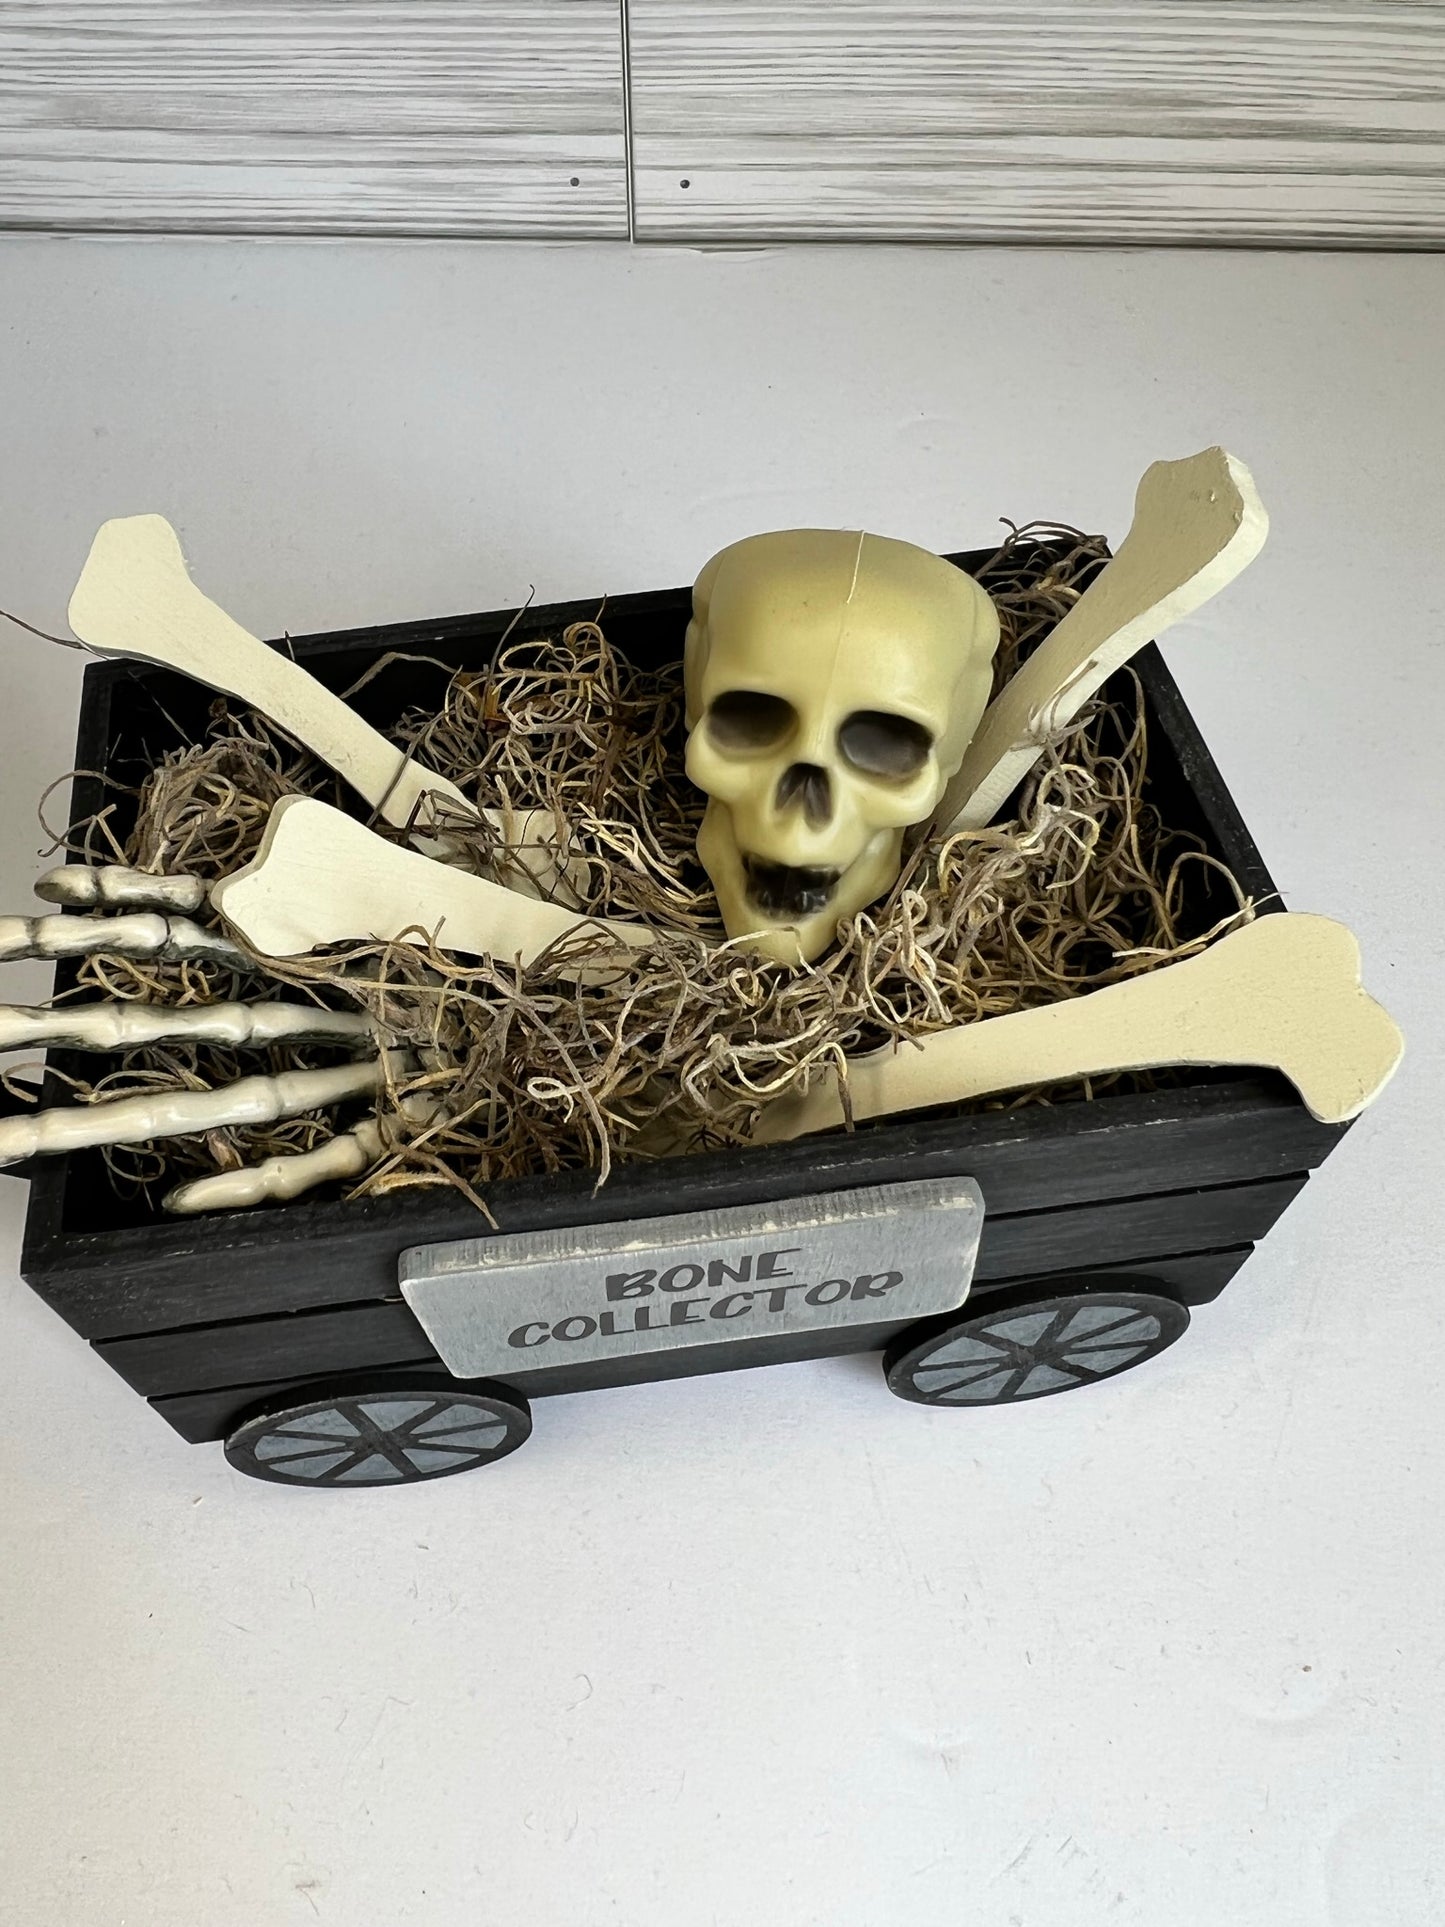 Bone Collector Wagon